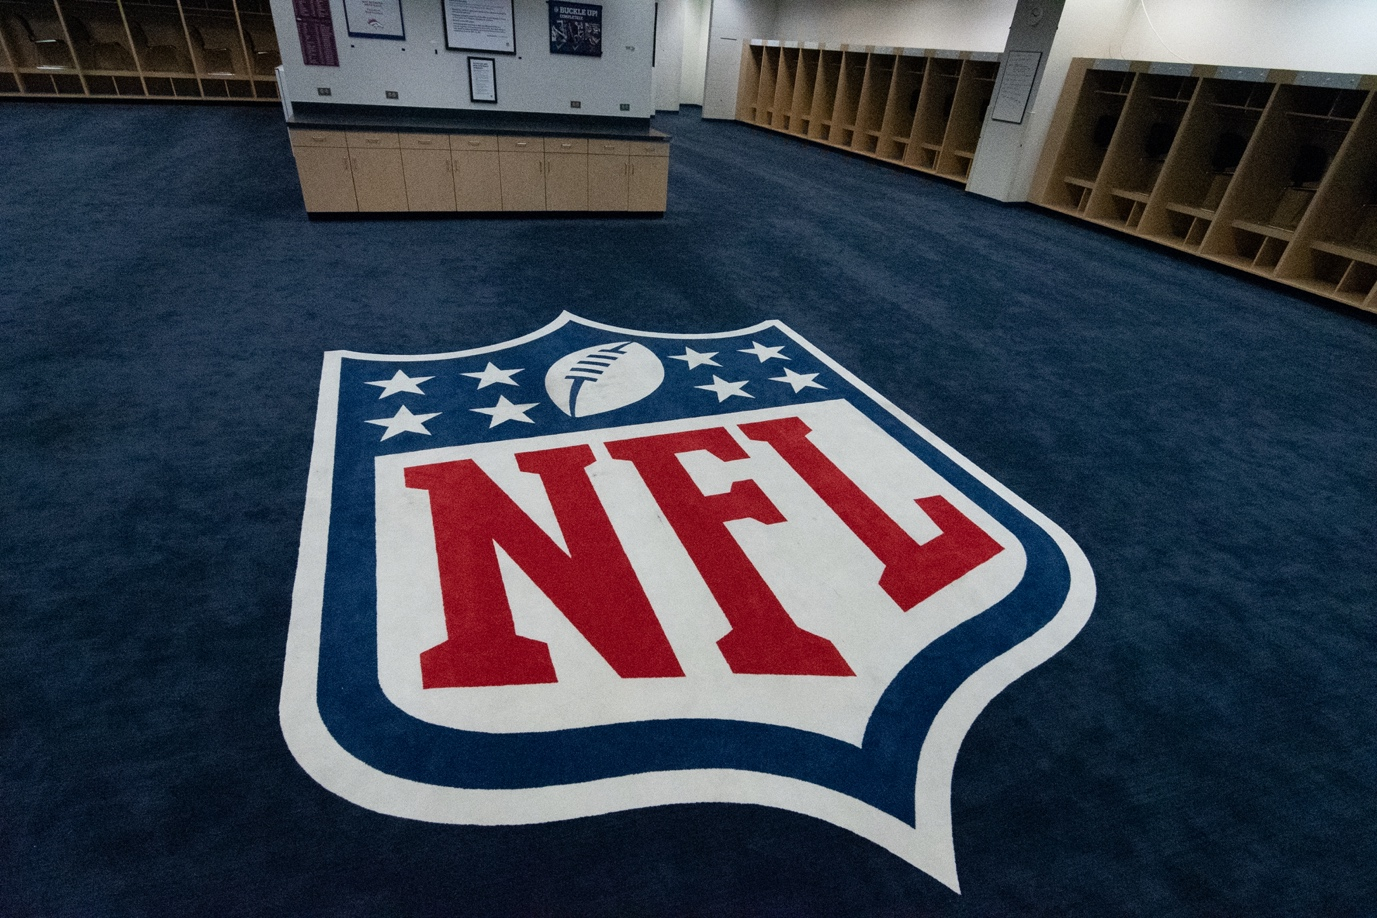 Carpet with NFL logo